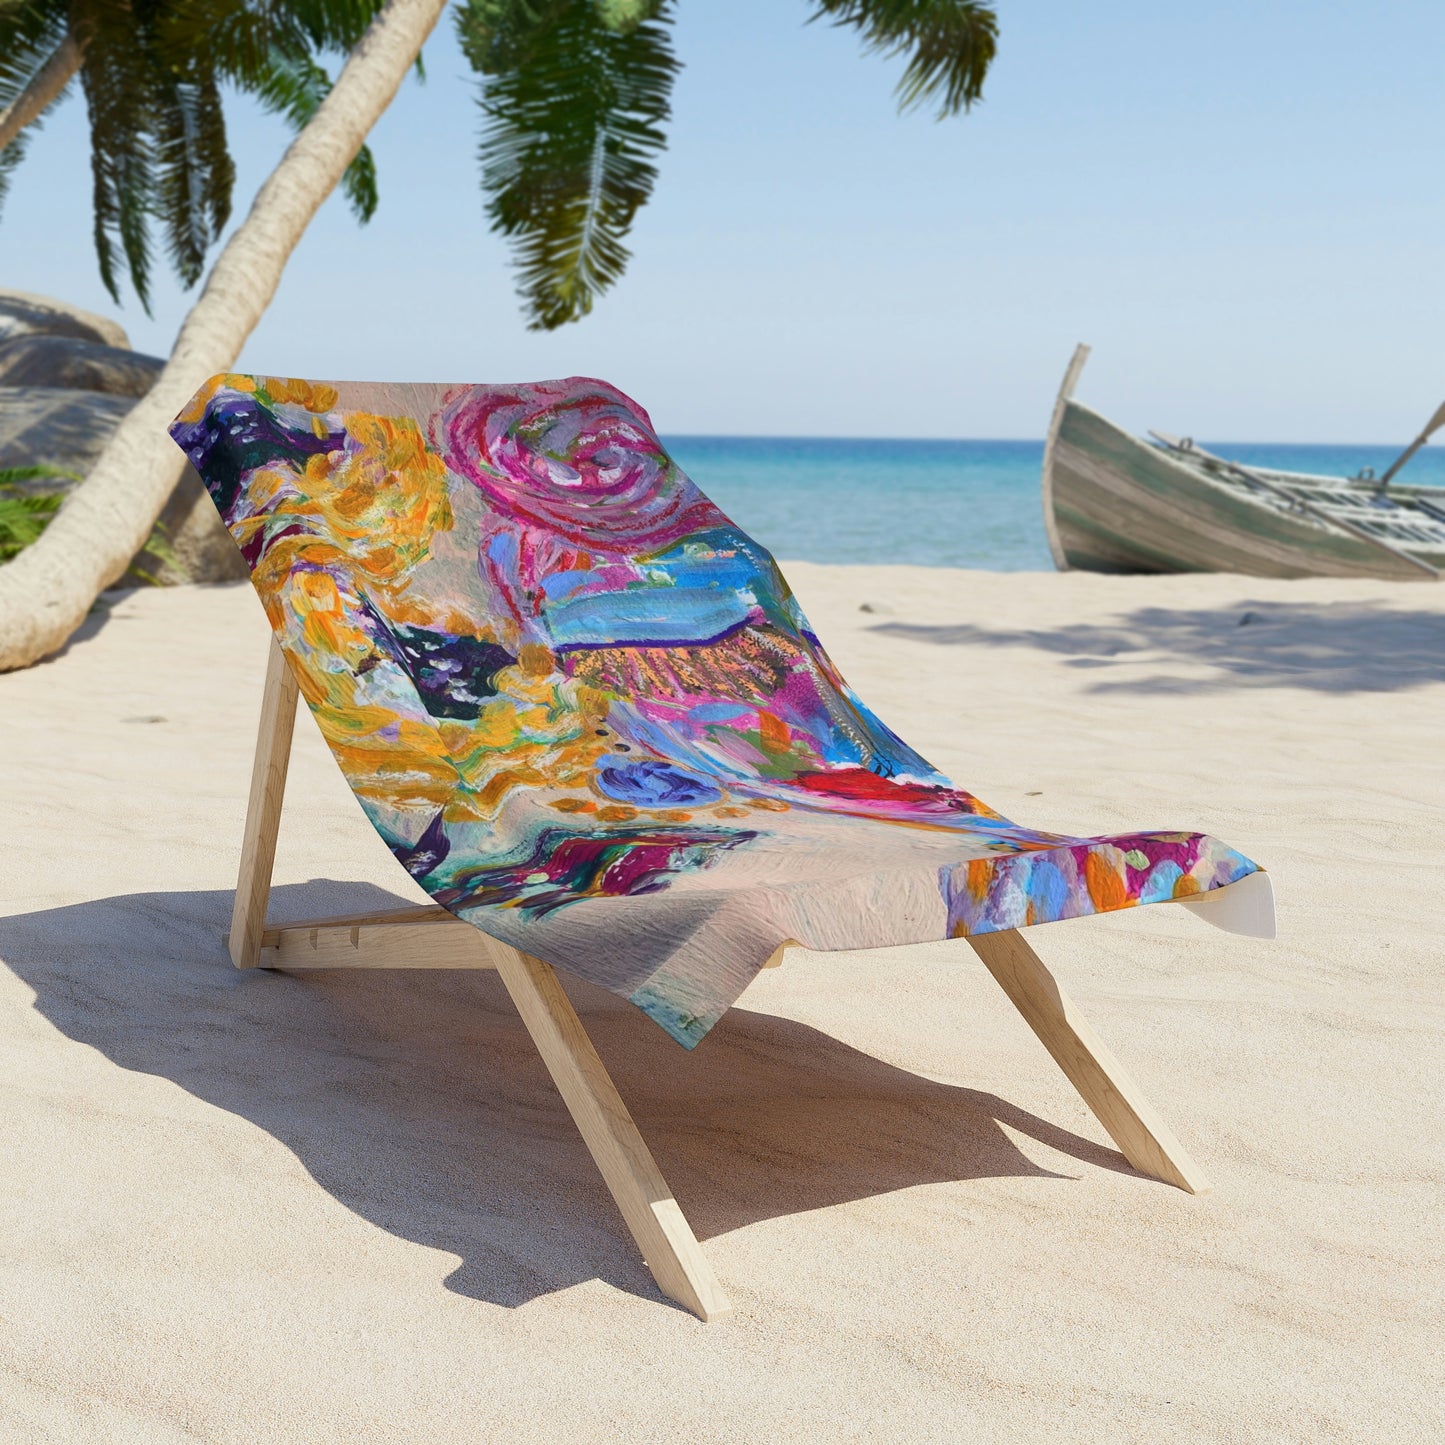 "Serene" Girl Talk Art Beach Towel